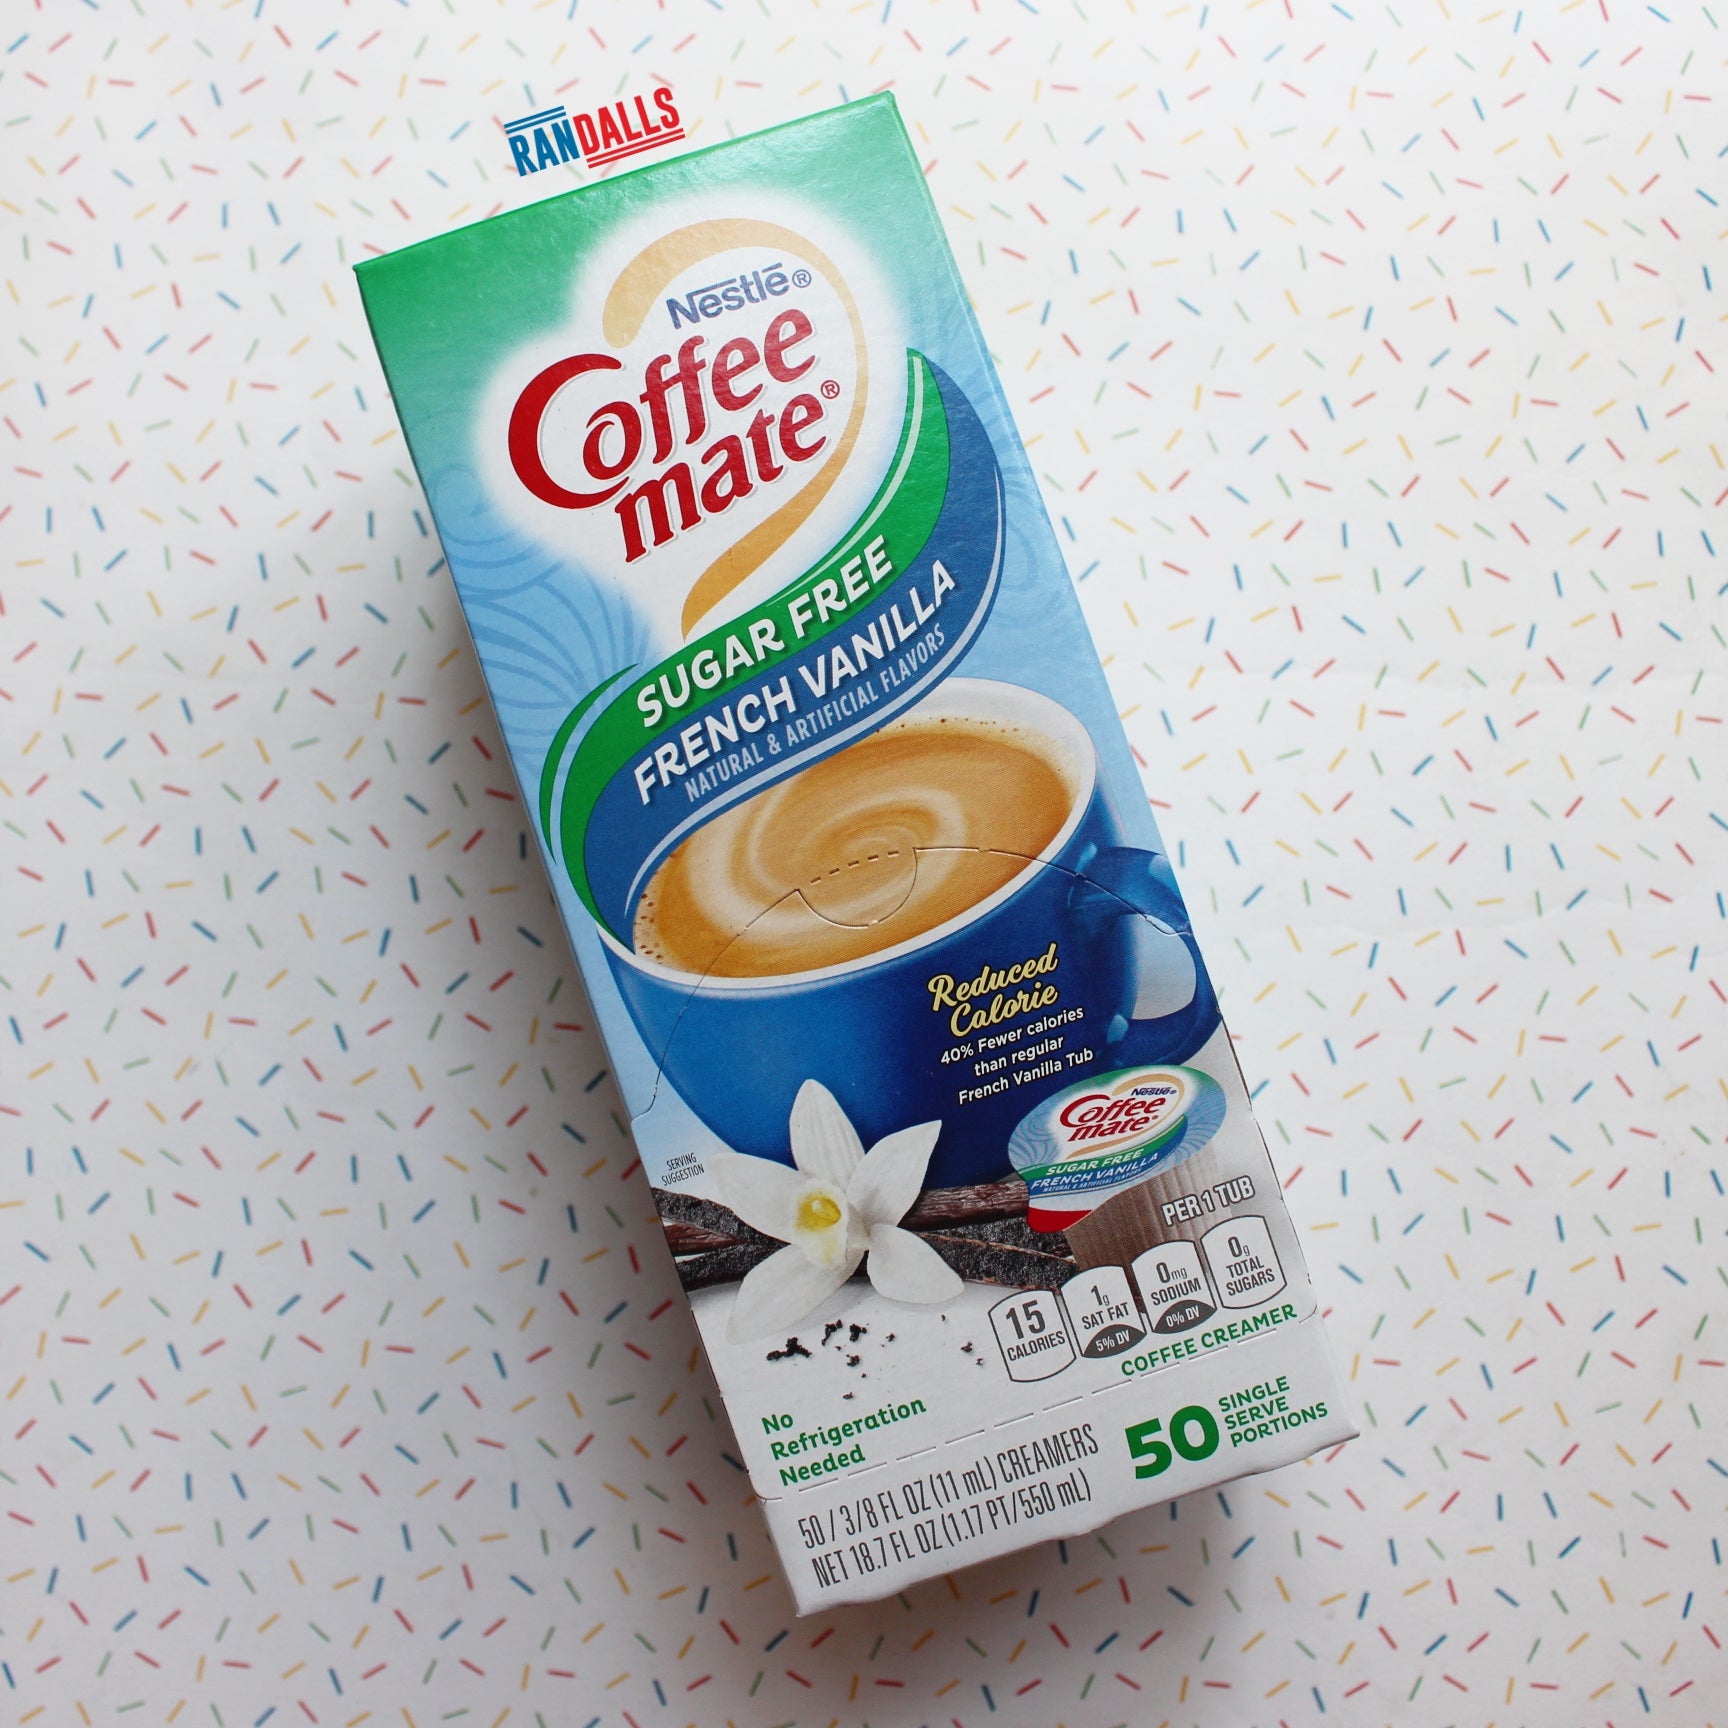 coffee-mate french vanilla sugar free, coffeemate, coffee mate, uht, milk, nestle, box of 50, randalls